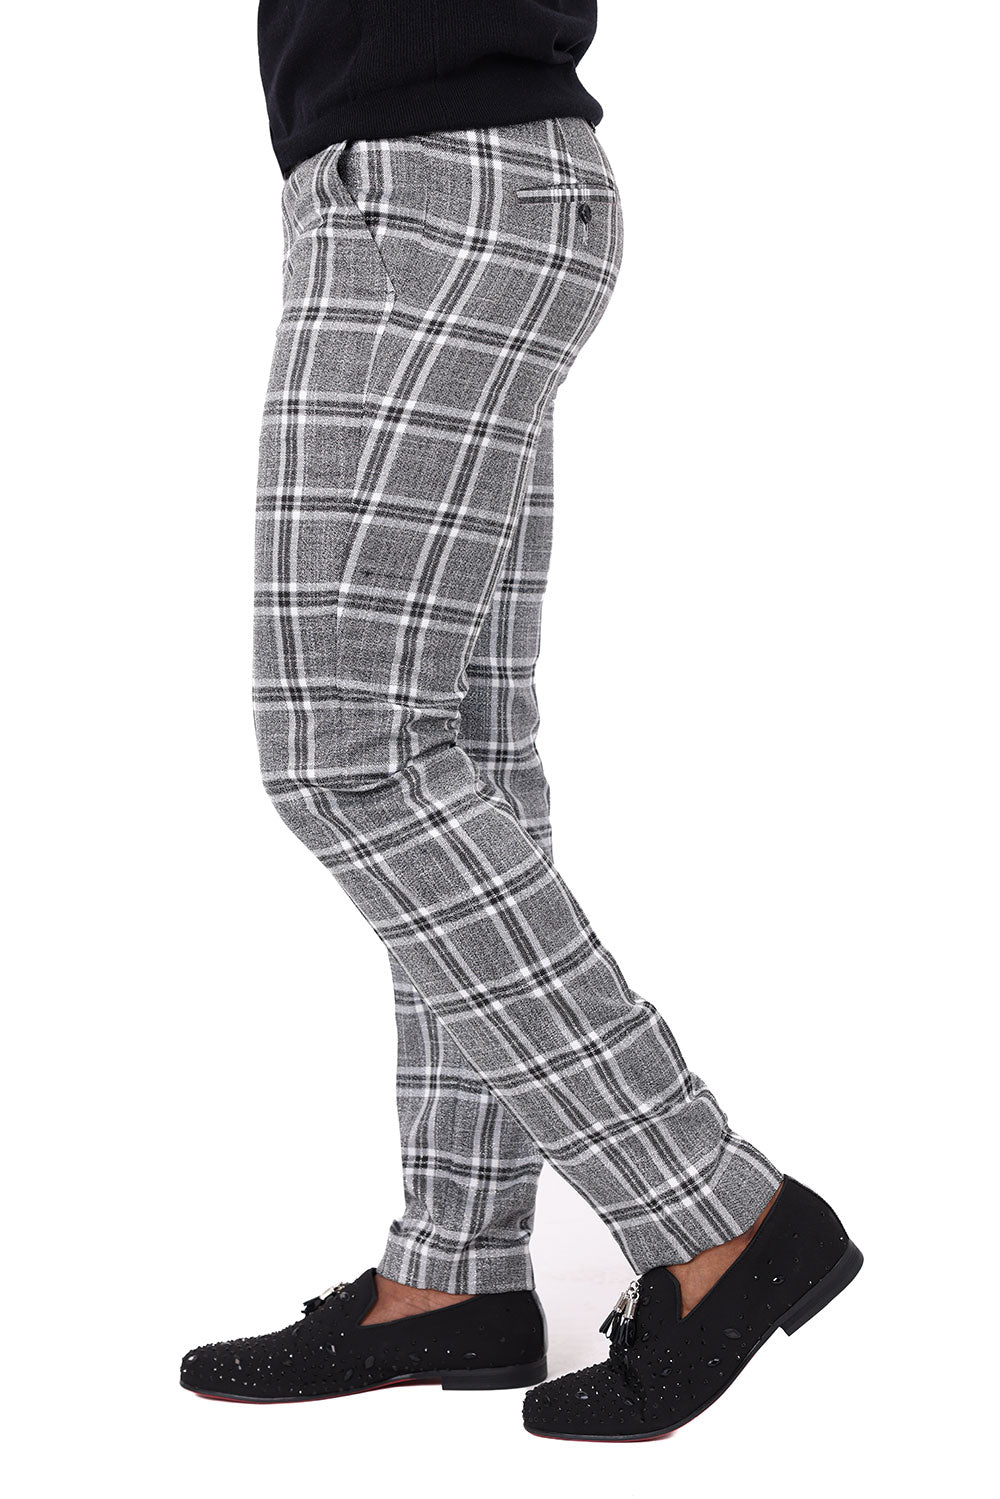 Barabas Men's Printed Checkered  Plaid Design Chino Pants  2CP187 Grey Silver